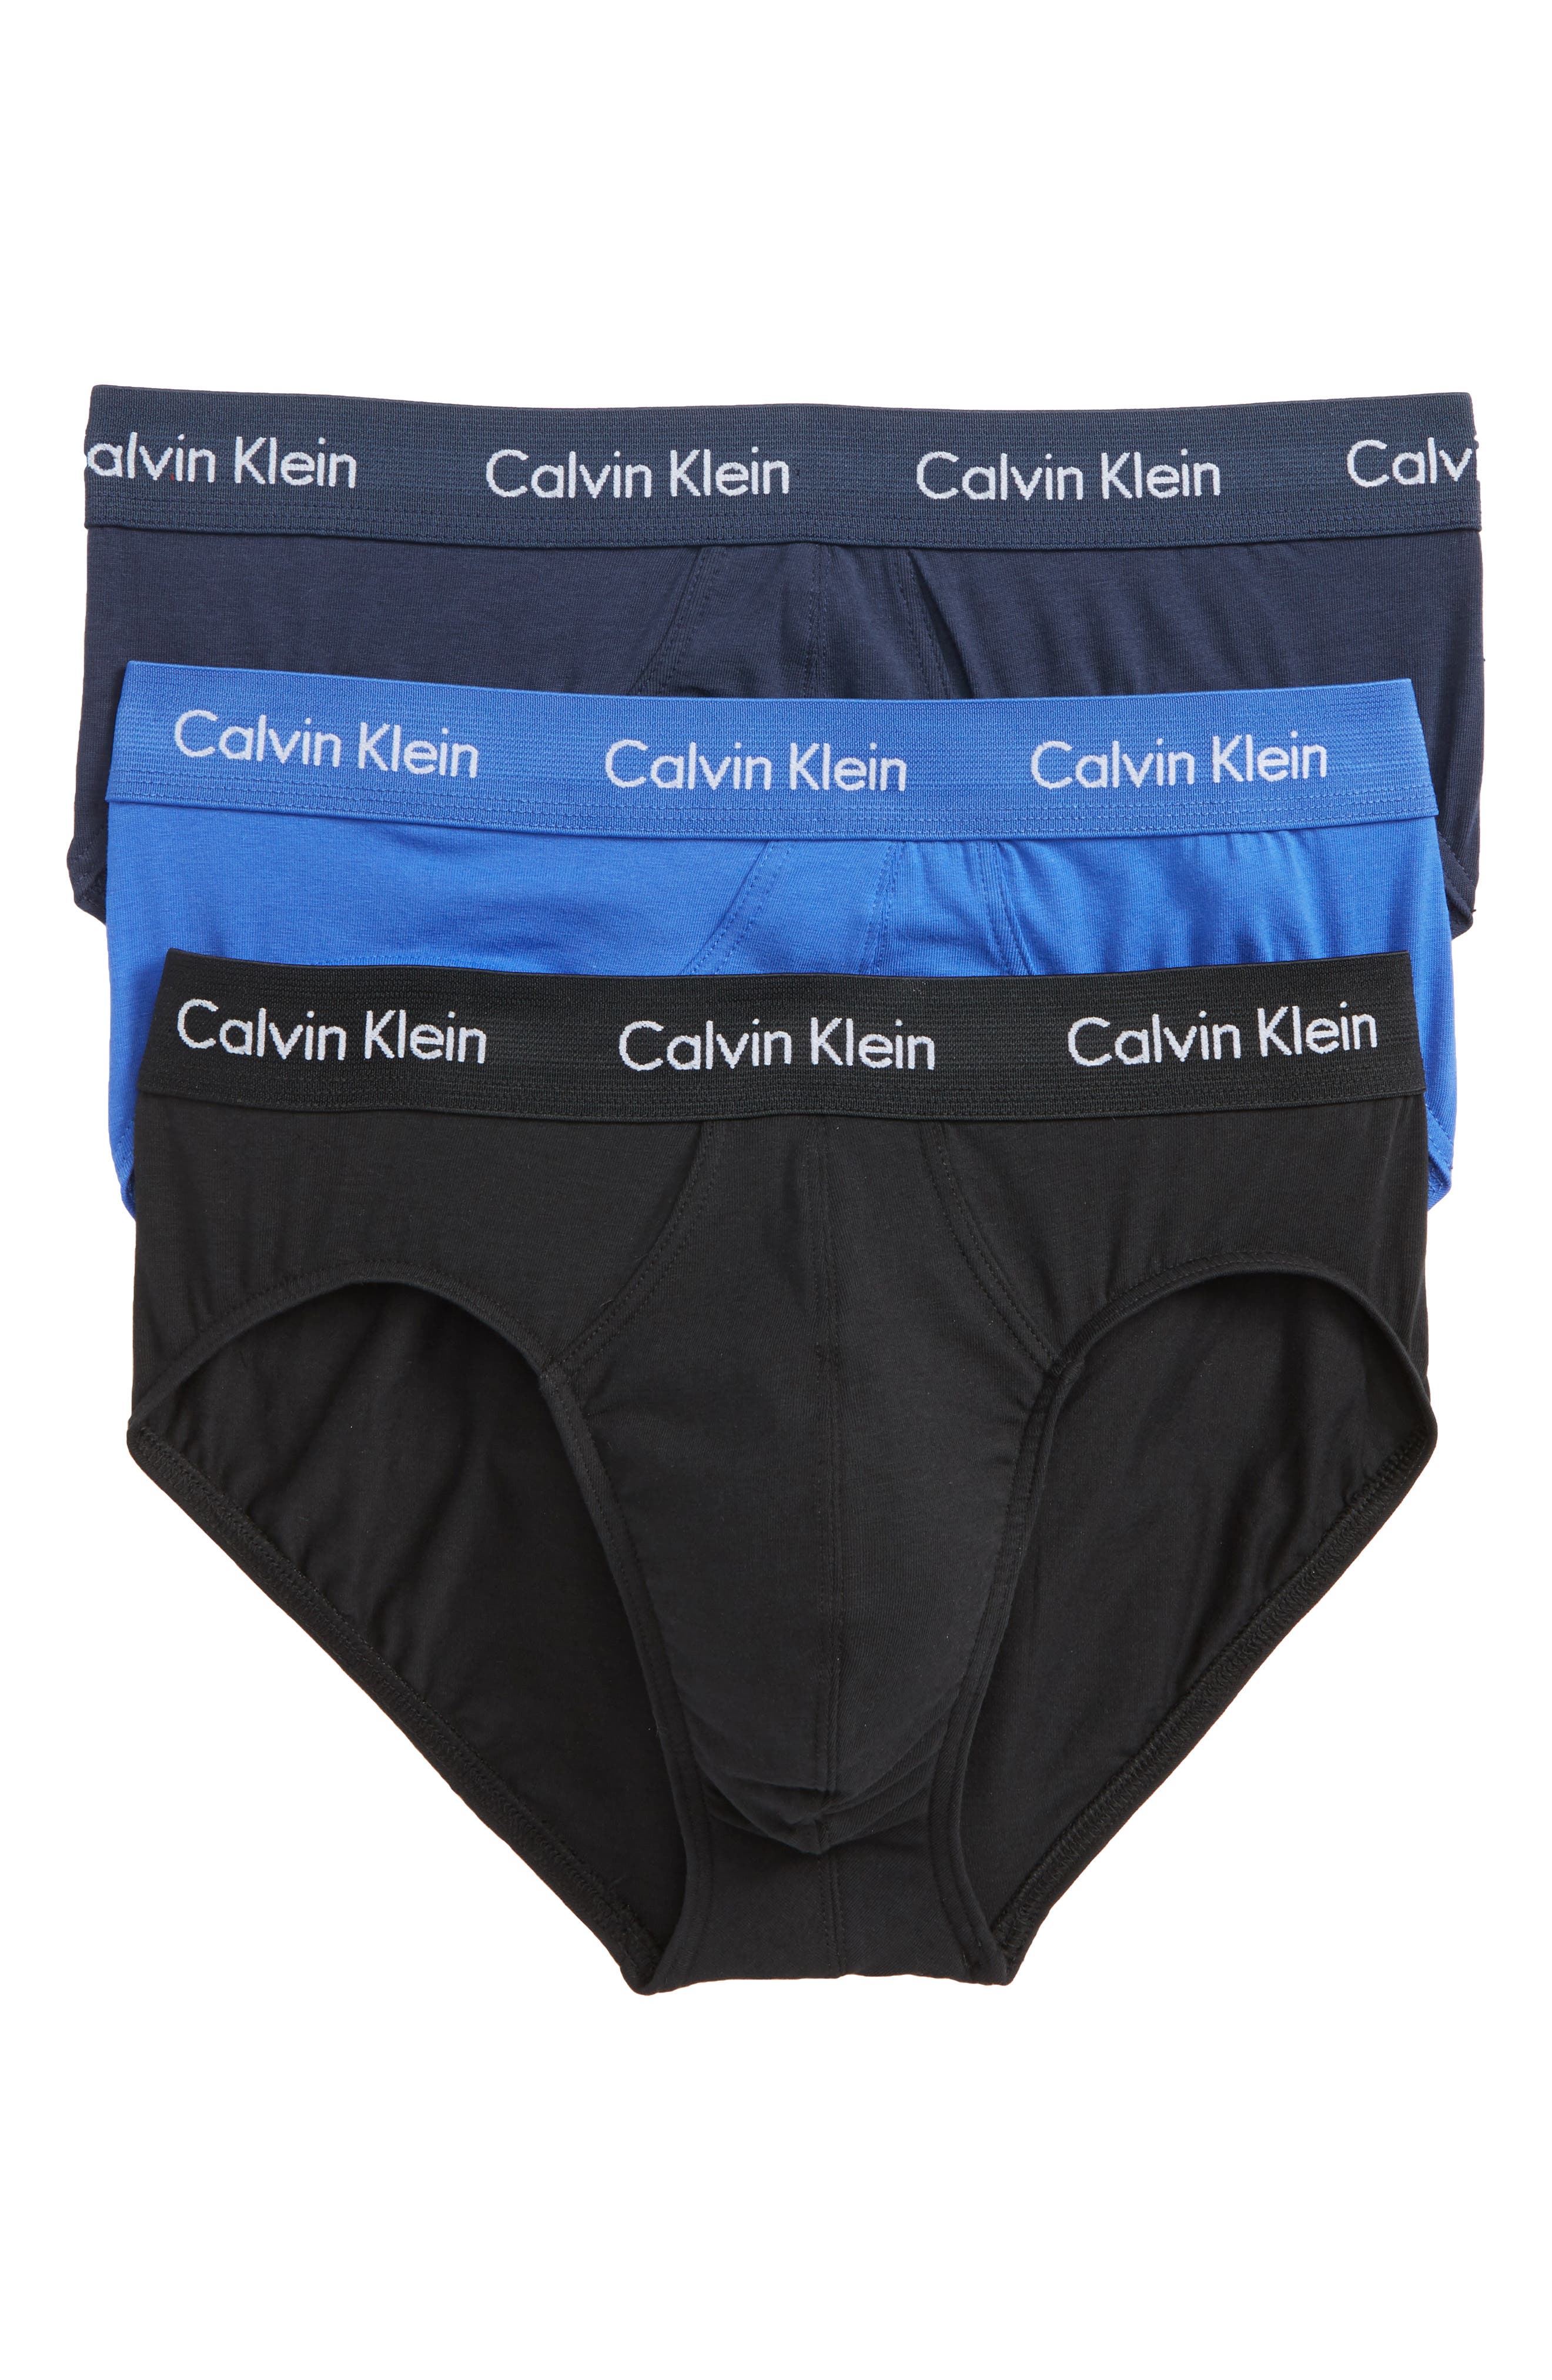 UPC 011531179868 product image for Men's Calvin Klein 3-Pack Hip Briefs, Size Medium - Blue | upcitemdb.com